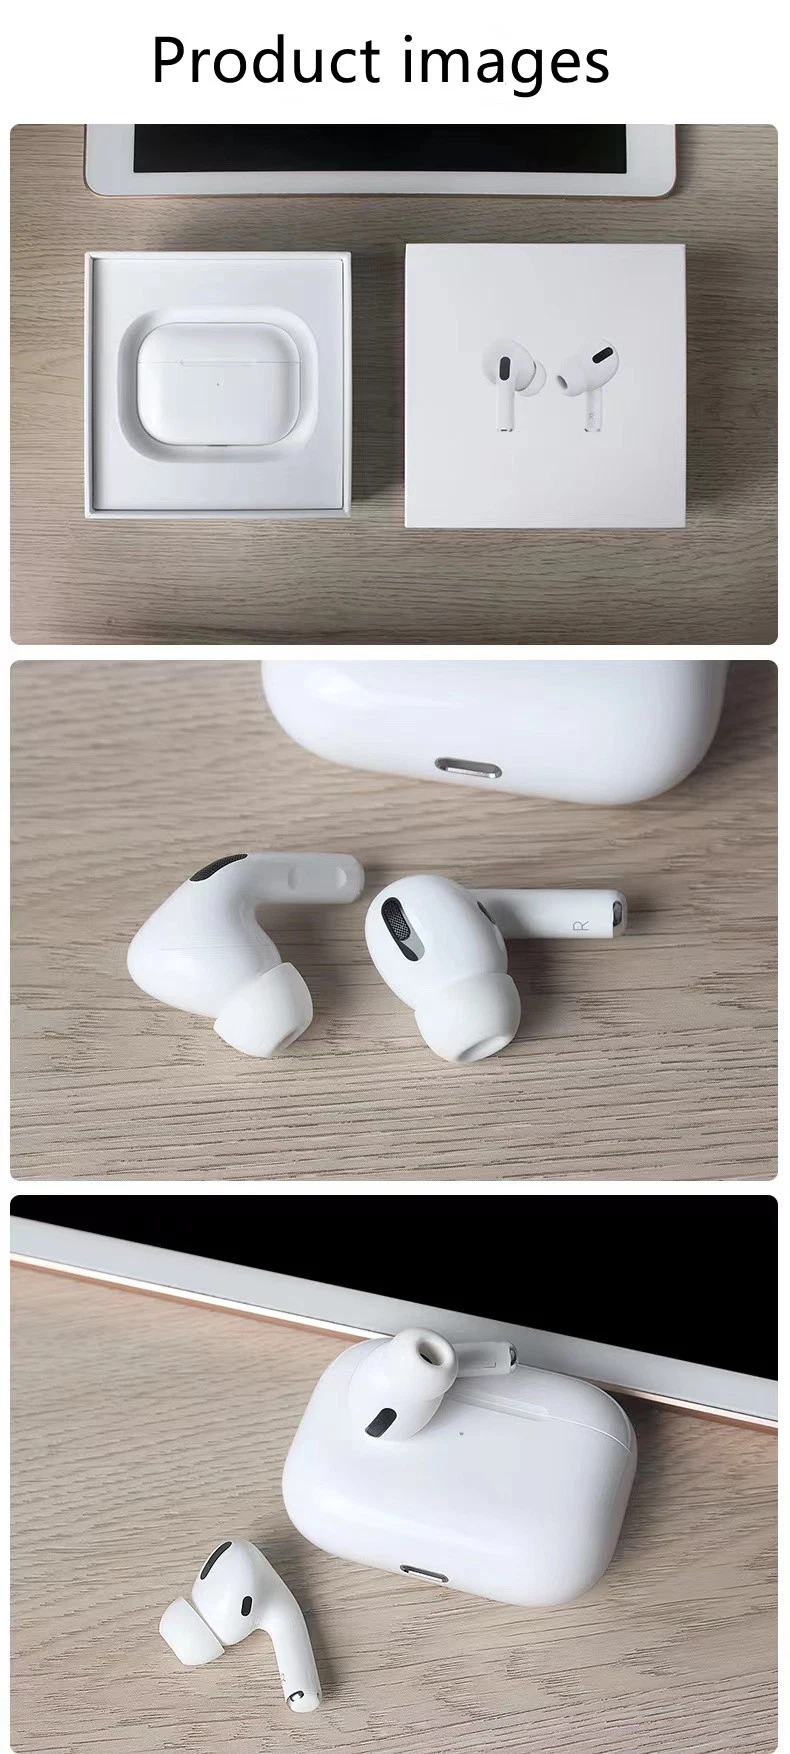 Hot Brand Airpods PRO Fashion Bluetooth Headphones Wireless Earphone